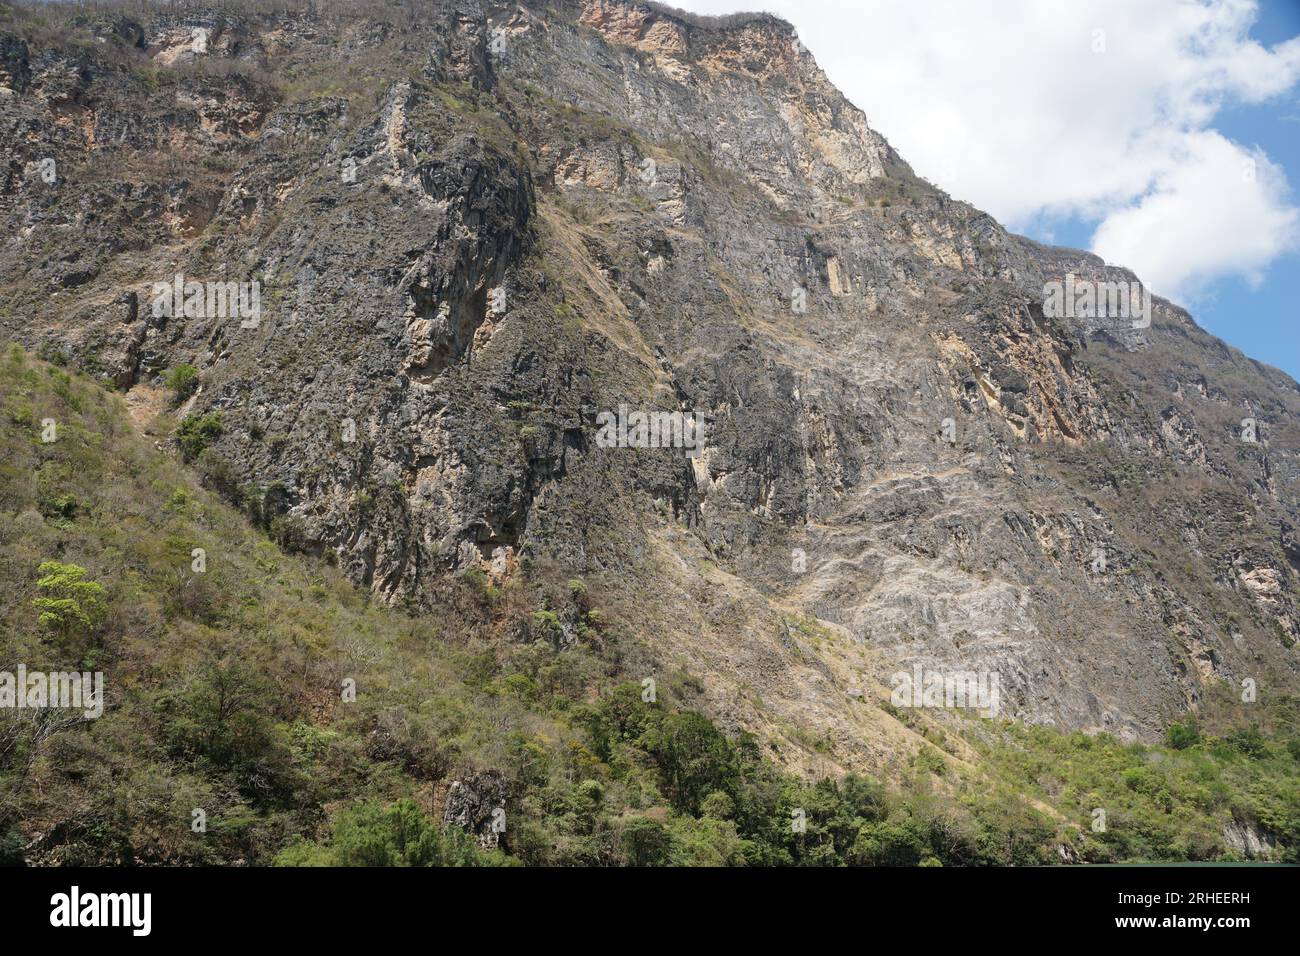 Limestone, sumidero canyon, sky, geology, clouds, trees, vegetation at chiapas, mexico Stock Photo